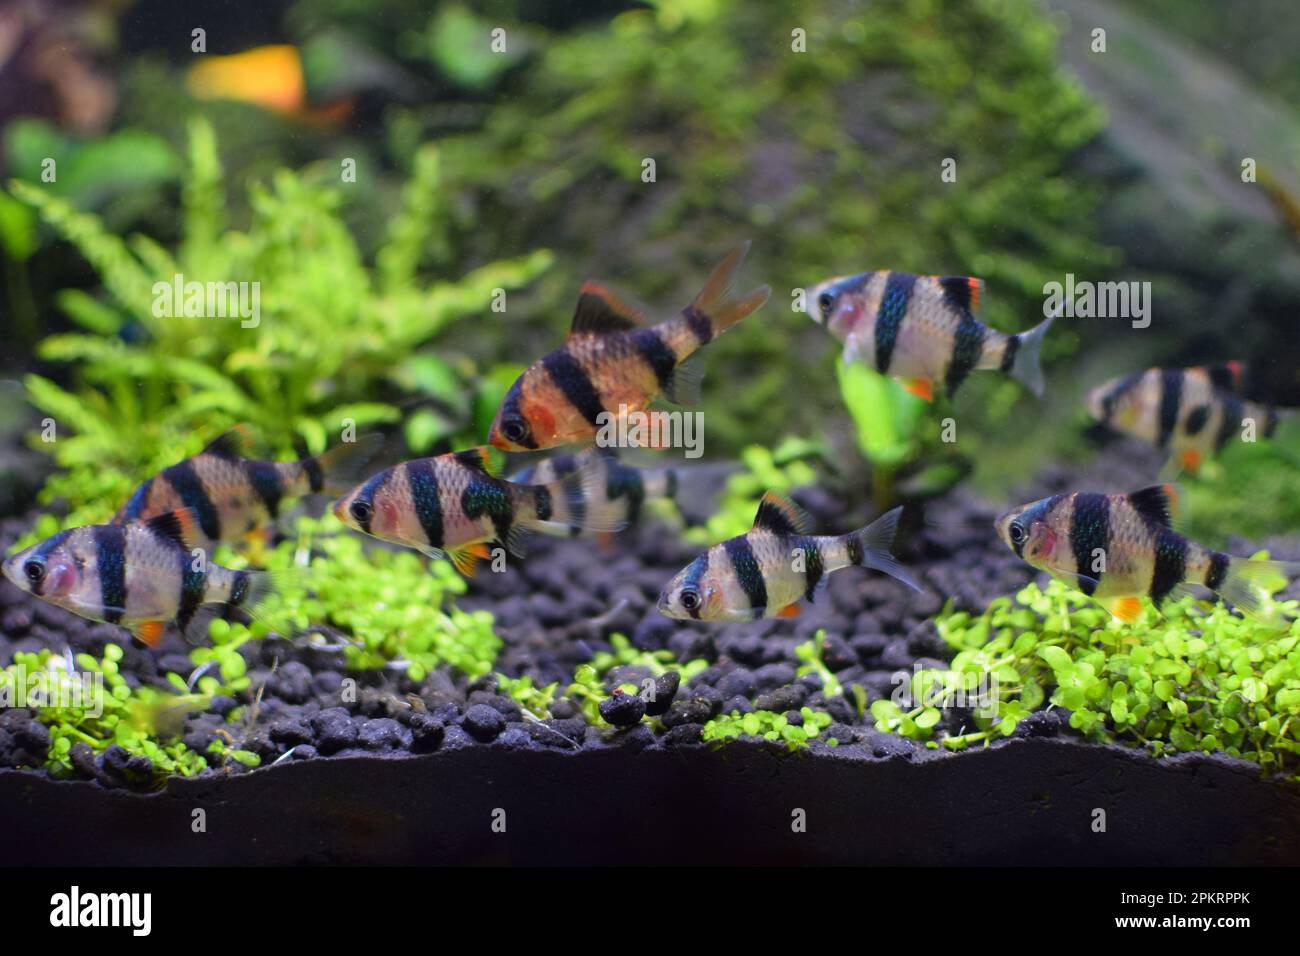 Sumatran barb in the aquarium, close-up view of the fish. Stock Photo